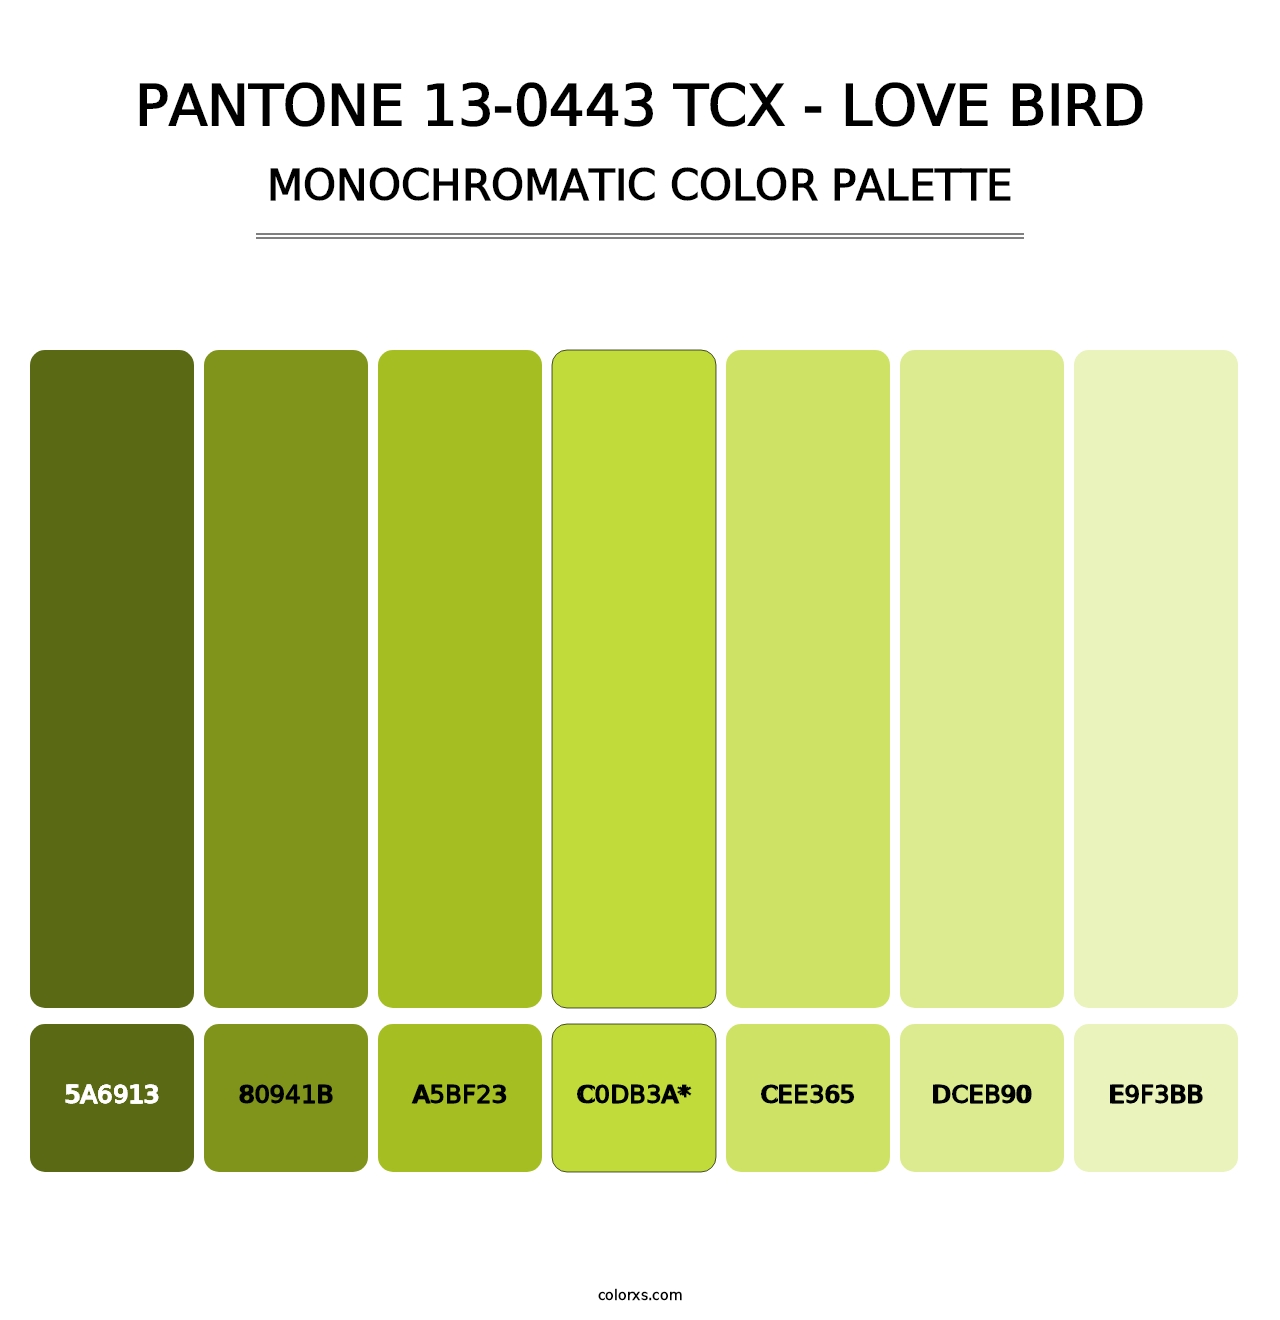 PANTONE 13-0443 TCX - Love Bird - Monochromatic Color Palette